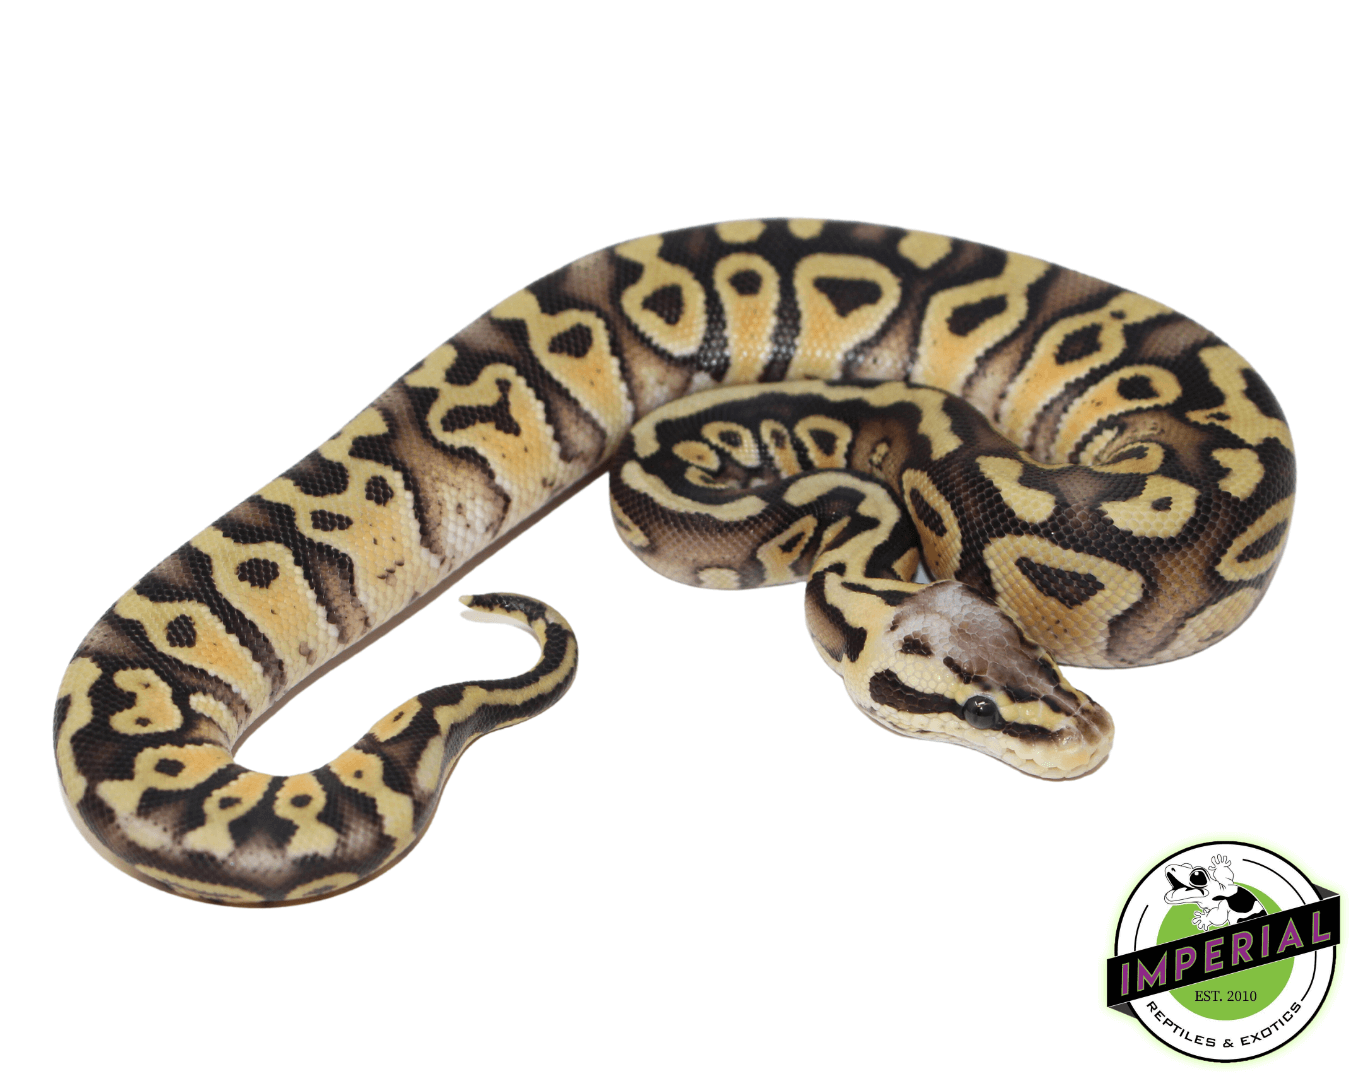 Firefly Gravel ball python for sale, buy reptiles online